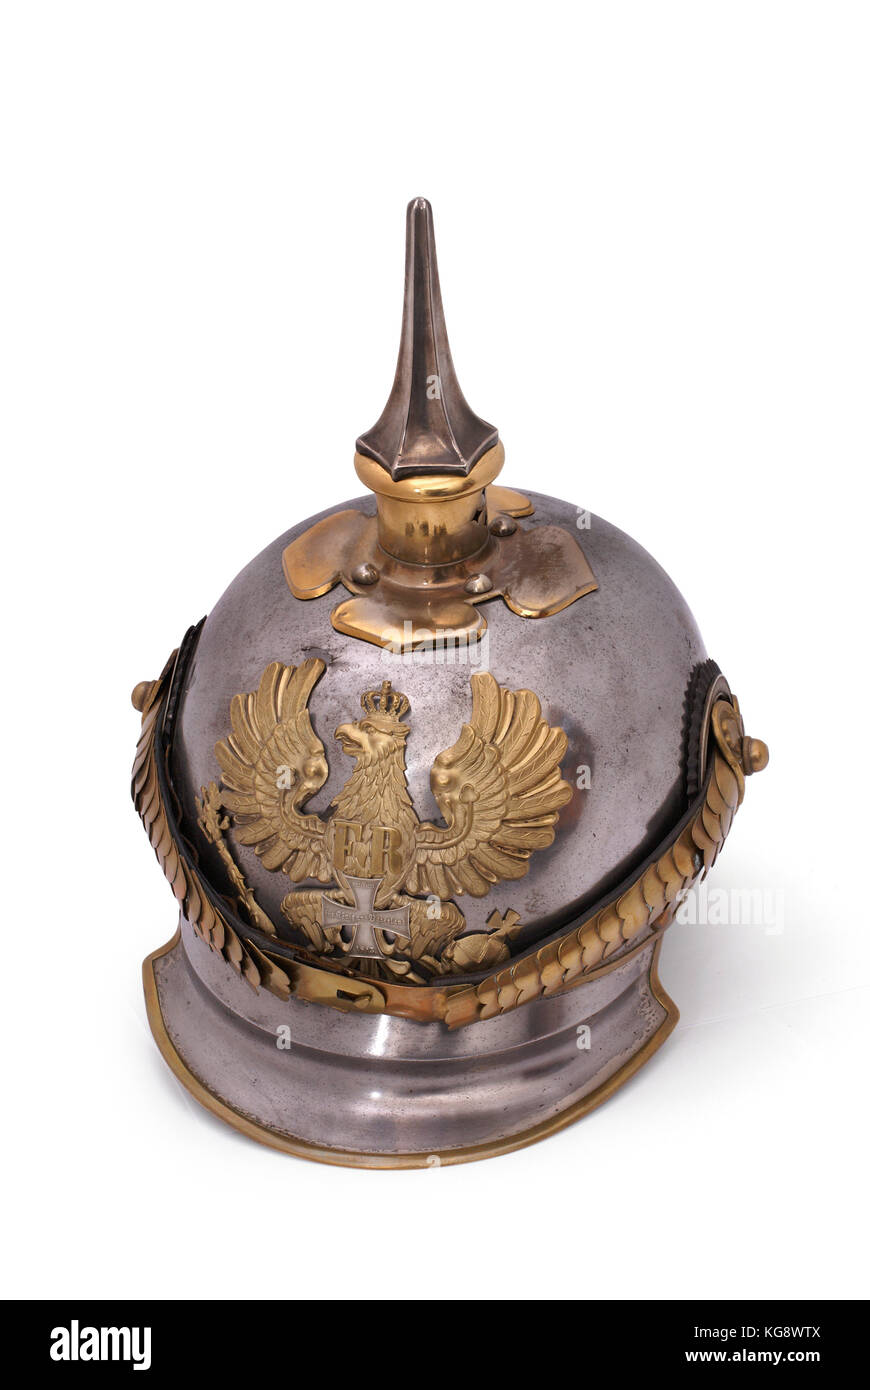 Old German helm of the 19th century, so called Pickelhaube (peaked helm). Stock Photo